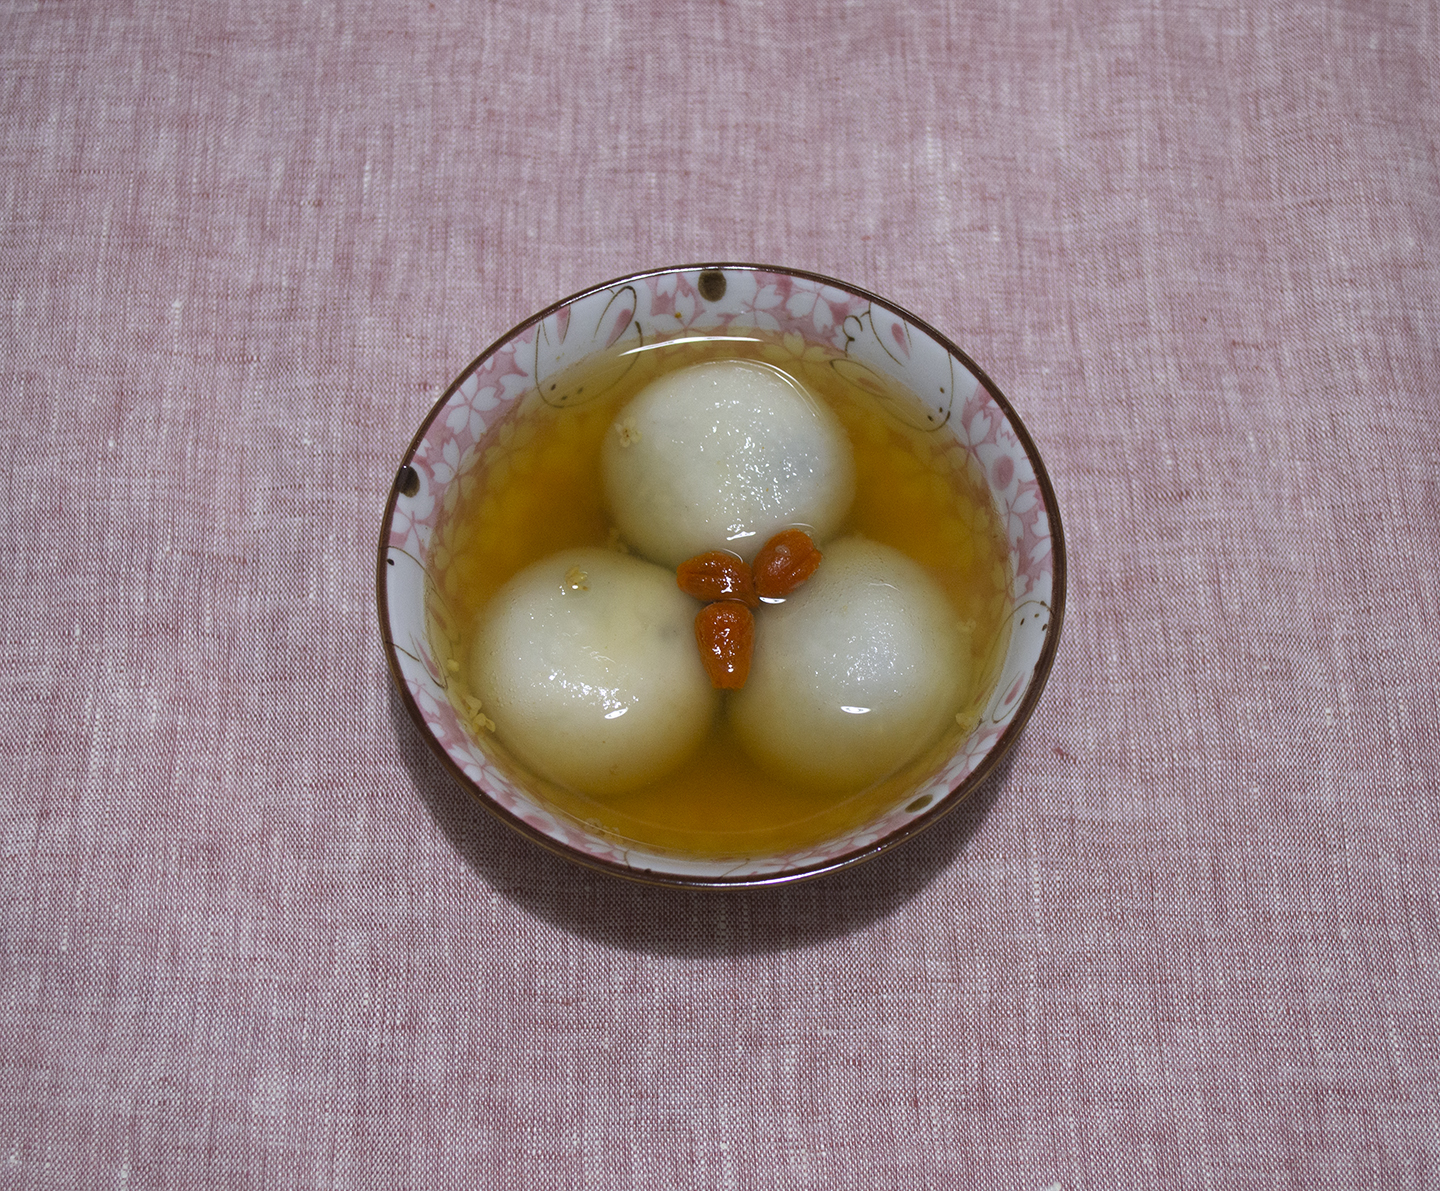 Hēi Zhīma Tāngyuán (黑芝麻湯圓) – Black Sesame Rice Balls in Ginger and Osmanthus Syrup